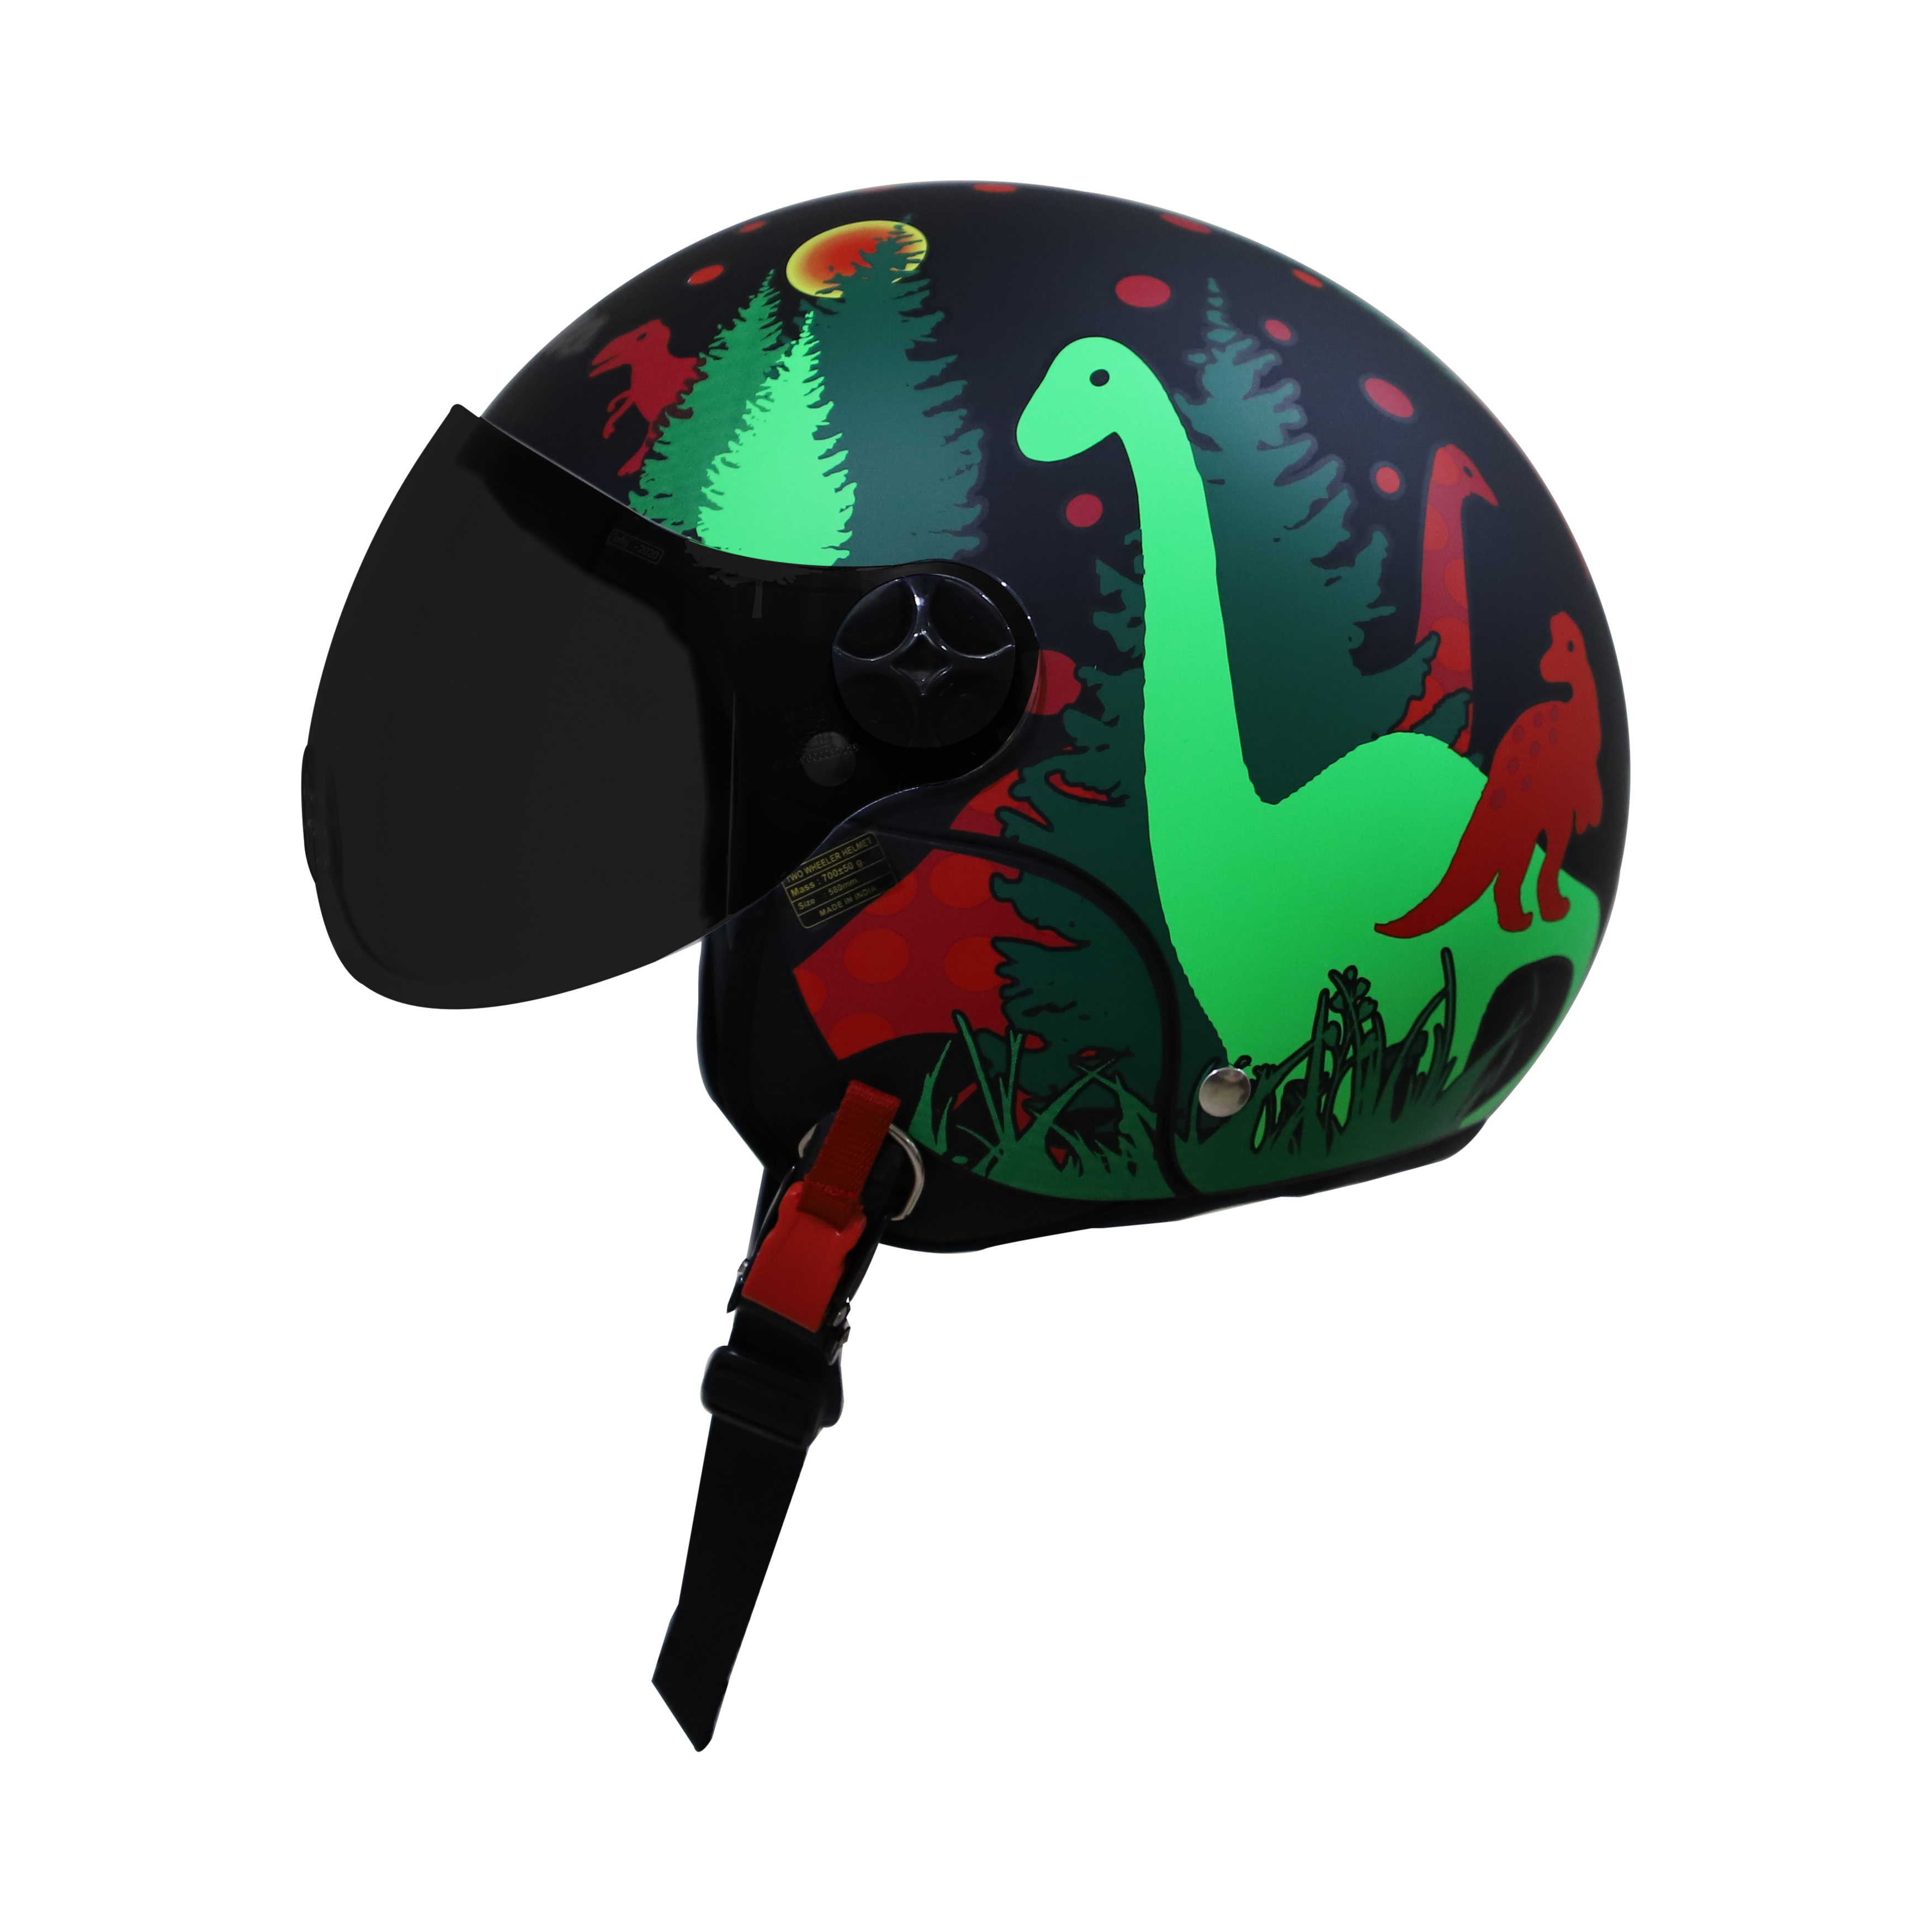 Steelbird Dino Open Face ISI Certified Helmet For Kids (Matt Black Red With Smoke Visor)